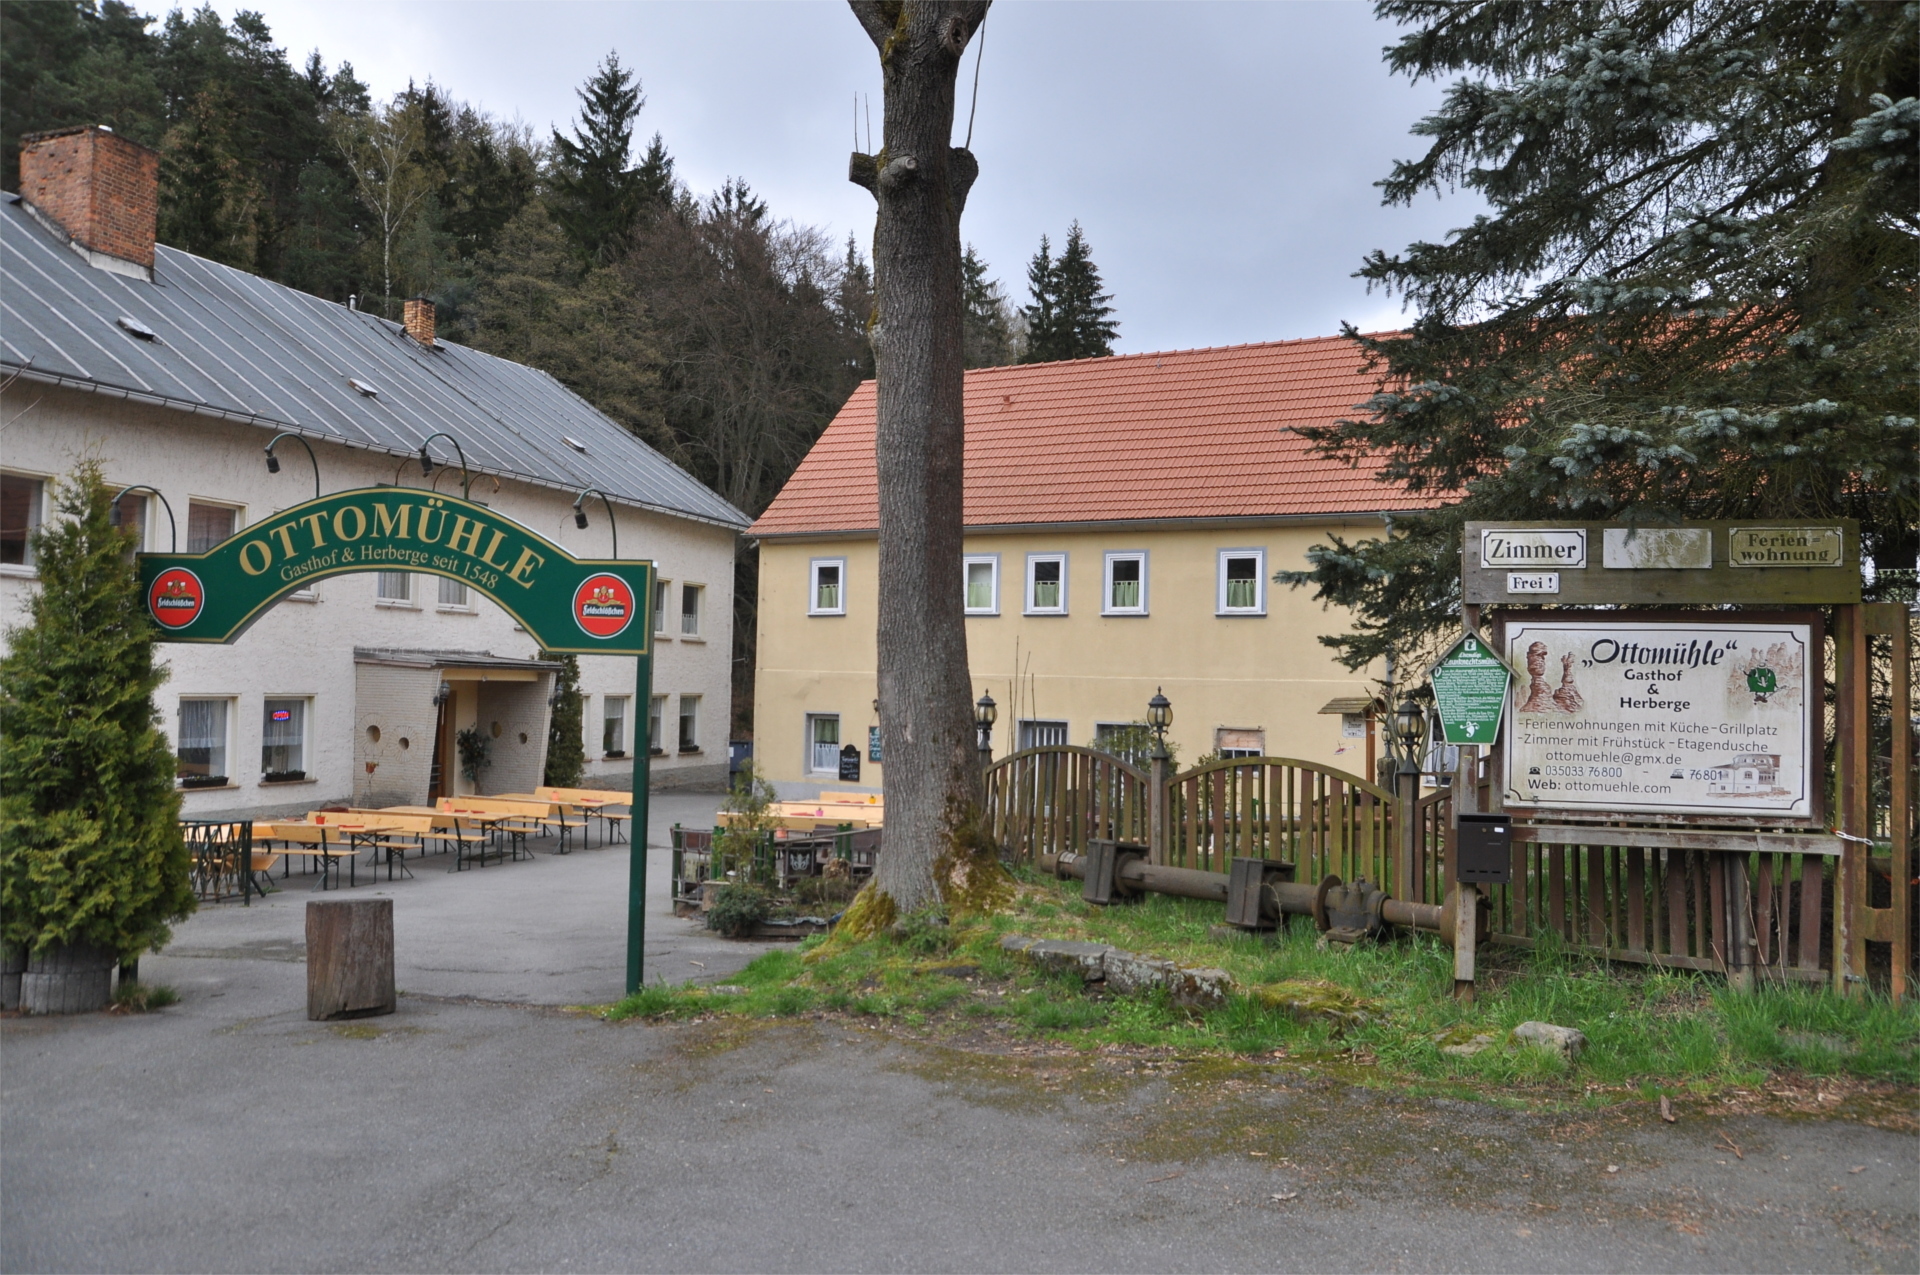 Ottomühle